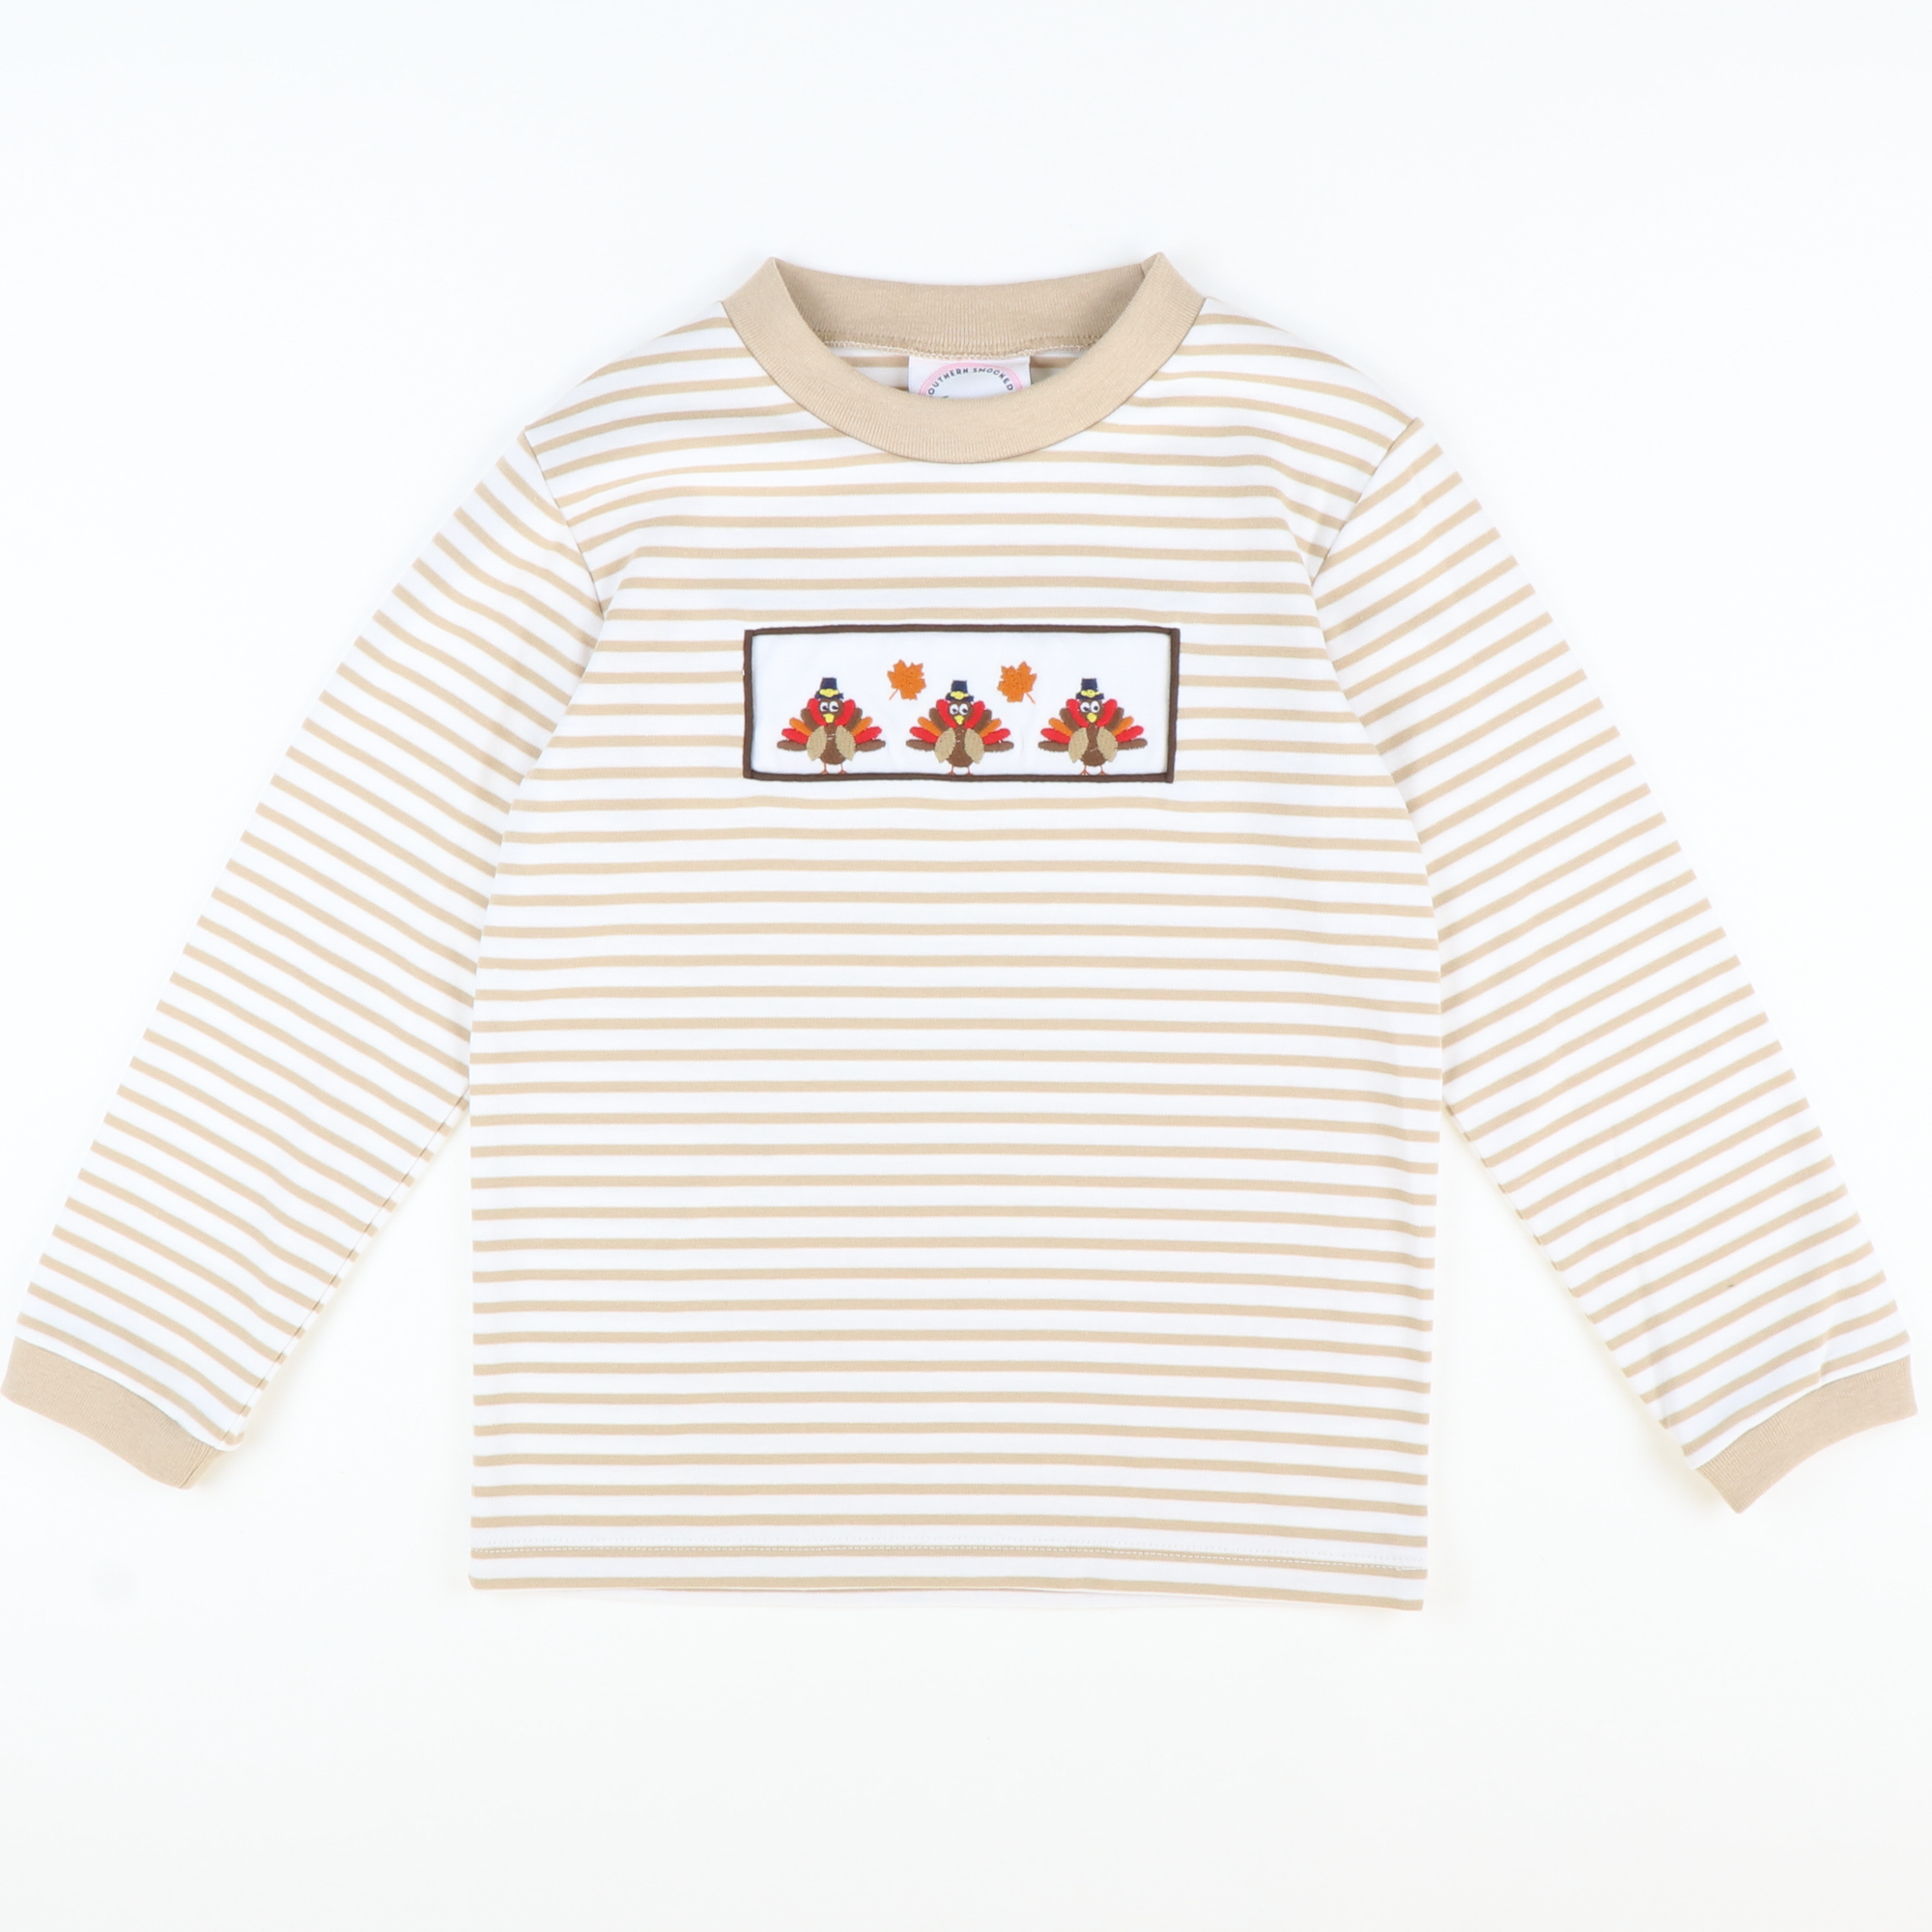 Embroidered Turkeys Long Sleeve Shirt - Tan Stripe Knit